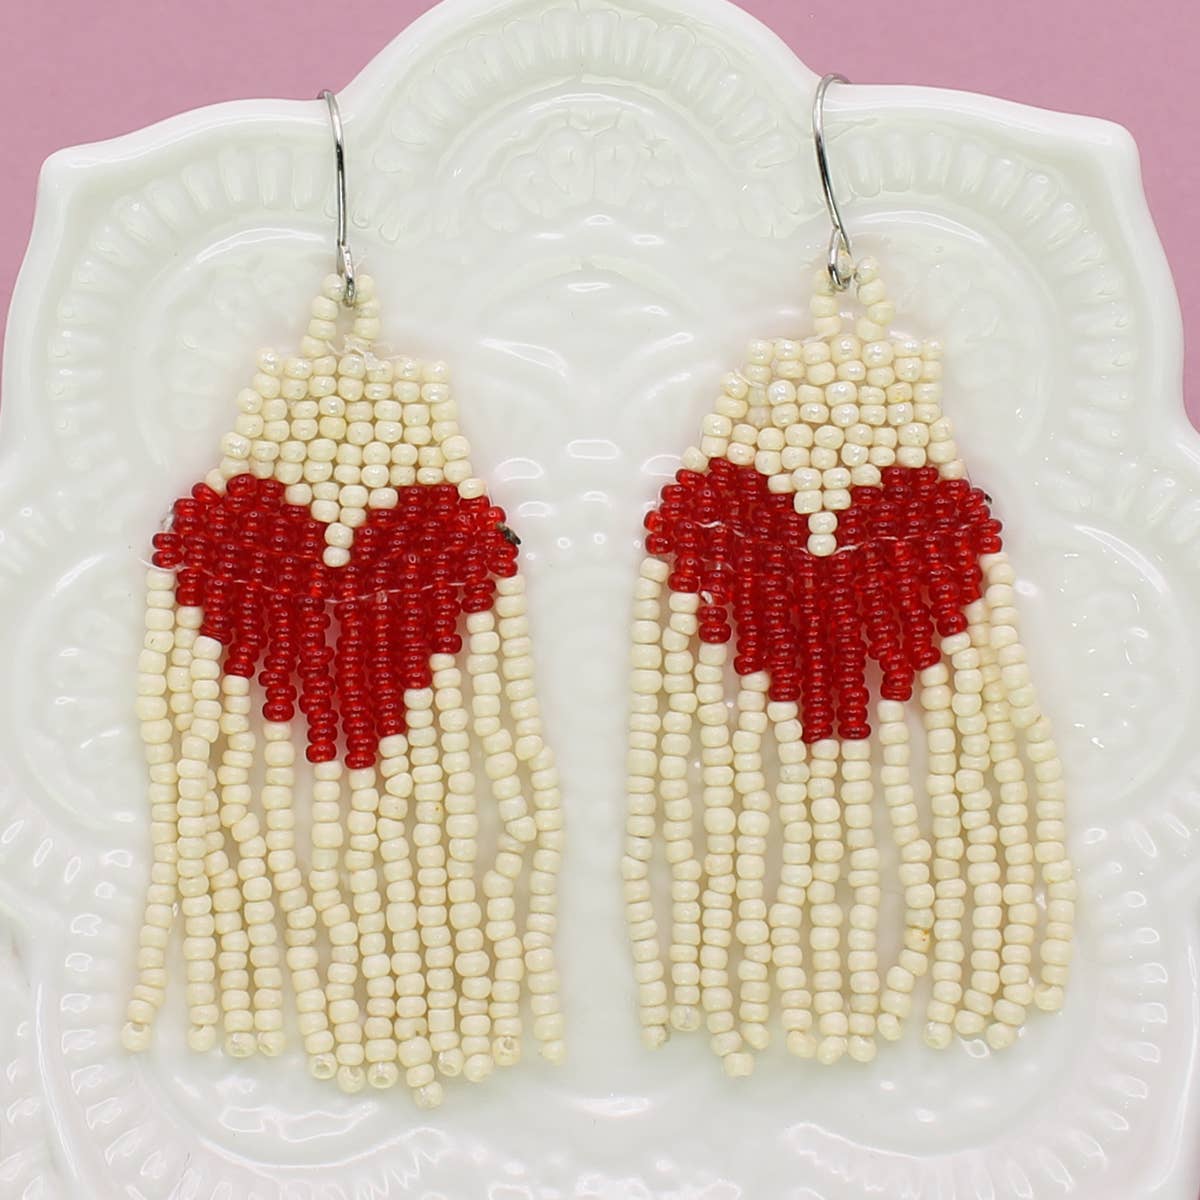 White beaded fringe earrings with a big heart